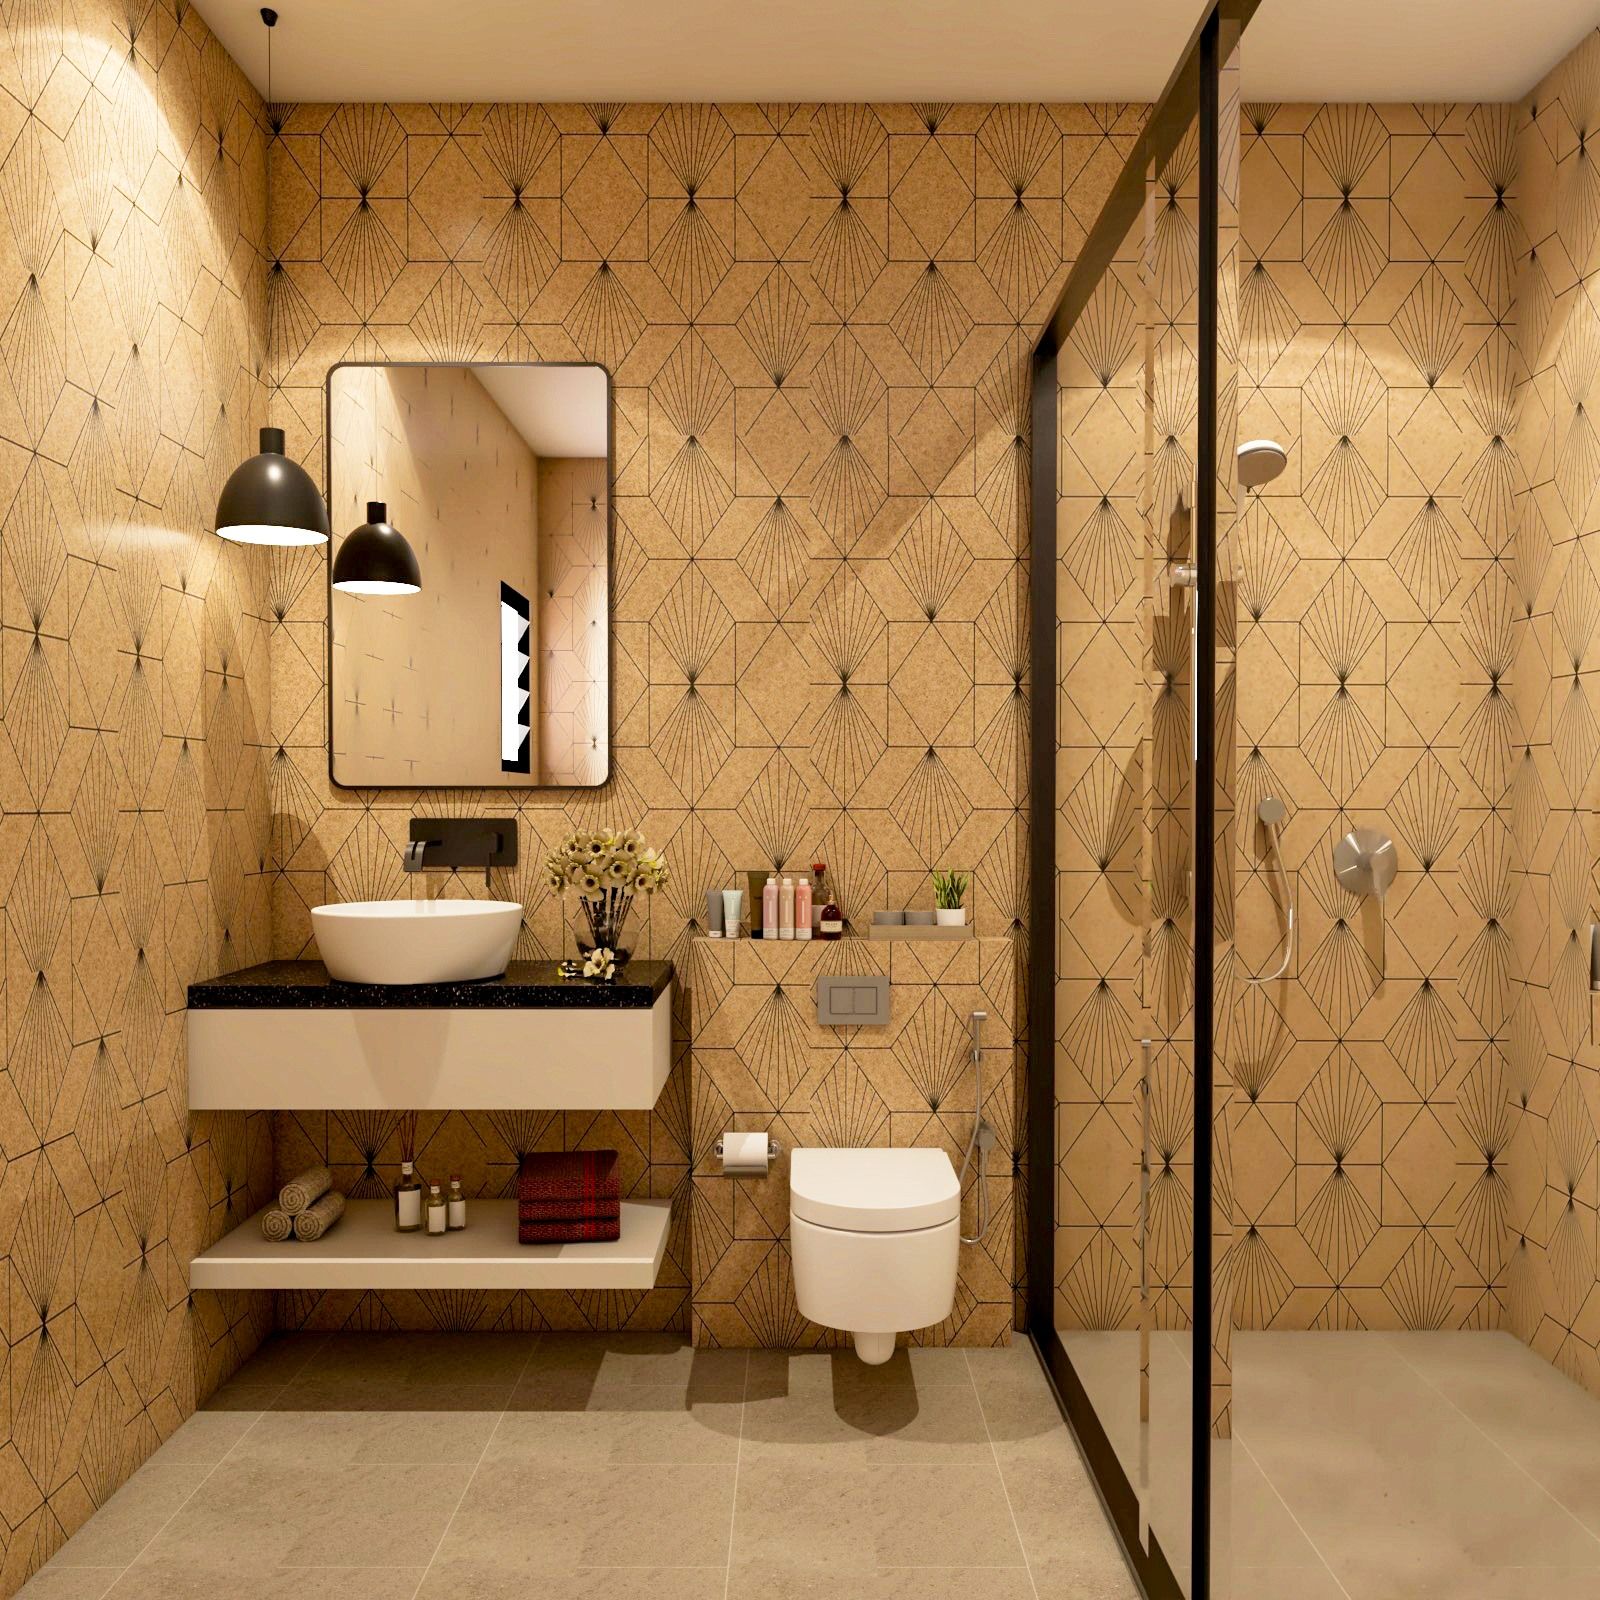 Modern Bathroom Design With A Black Granite Countertop